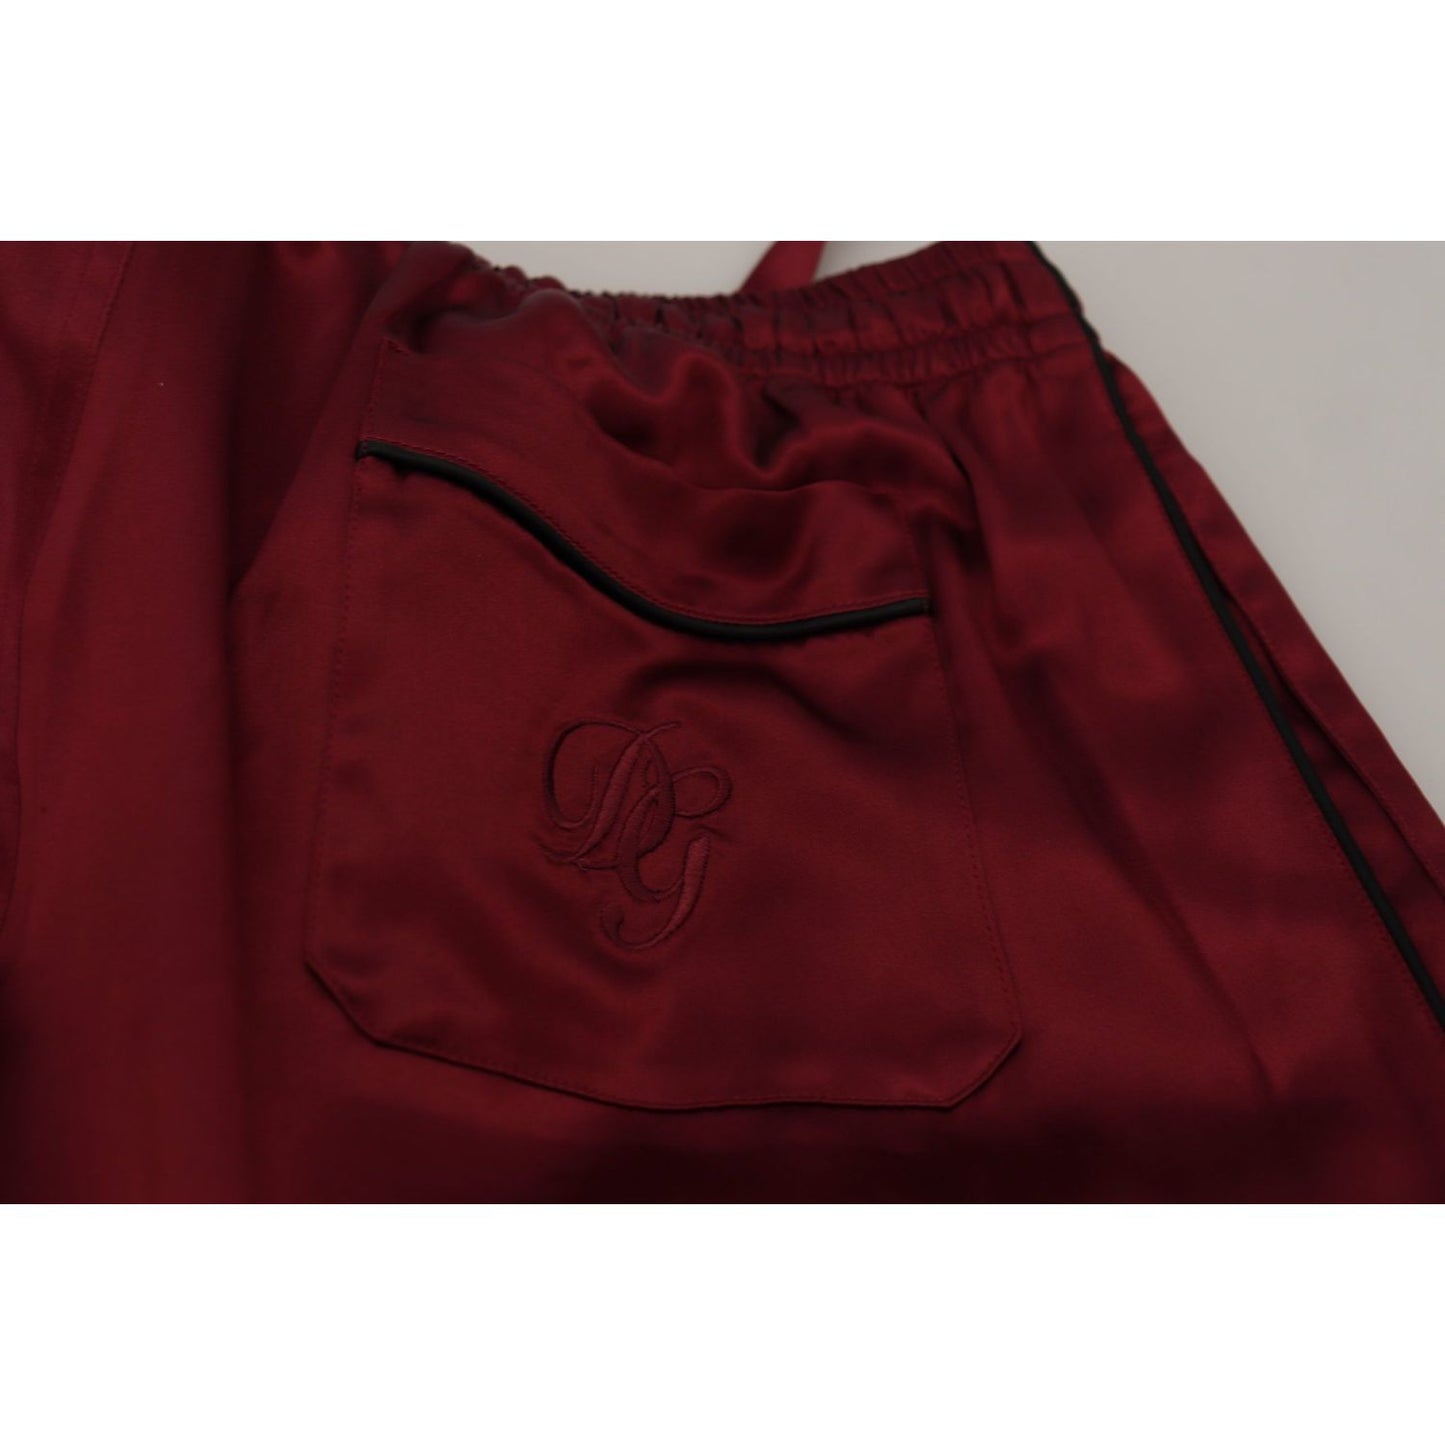 Dolce & Gabbana Silk Lounge Pants in Bordeaux Jeans & Pants bordeaux-silk-dg-sleep-lounge-pants IMG_7186-1-scaled-e6091502-375.jpg